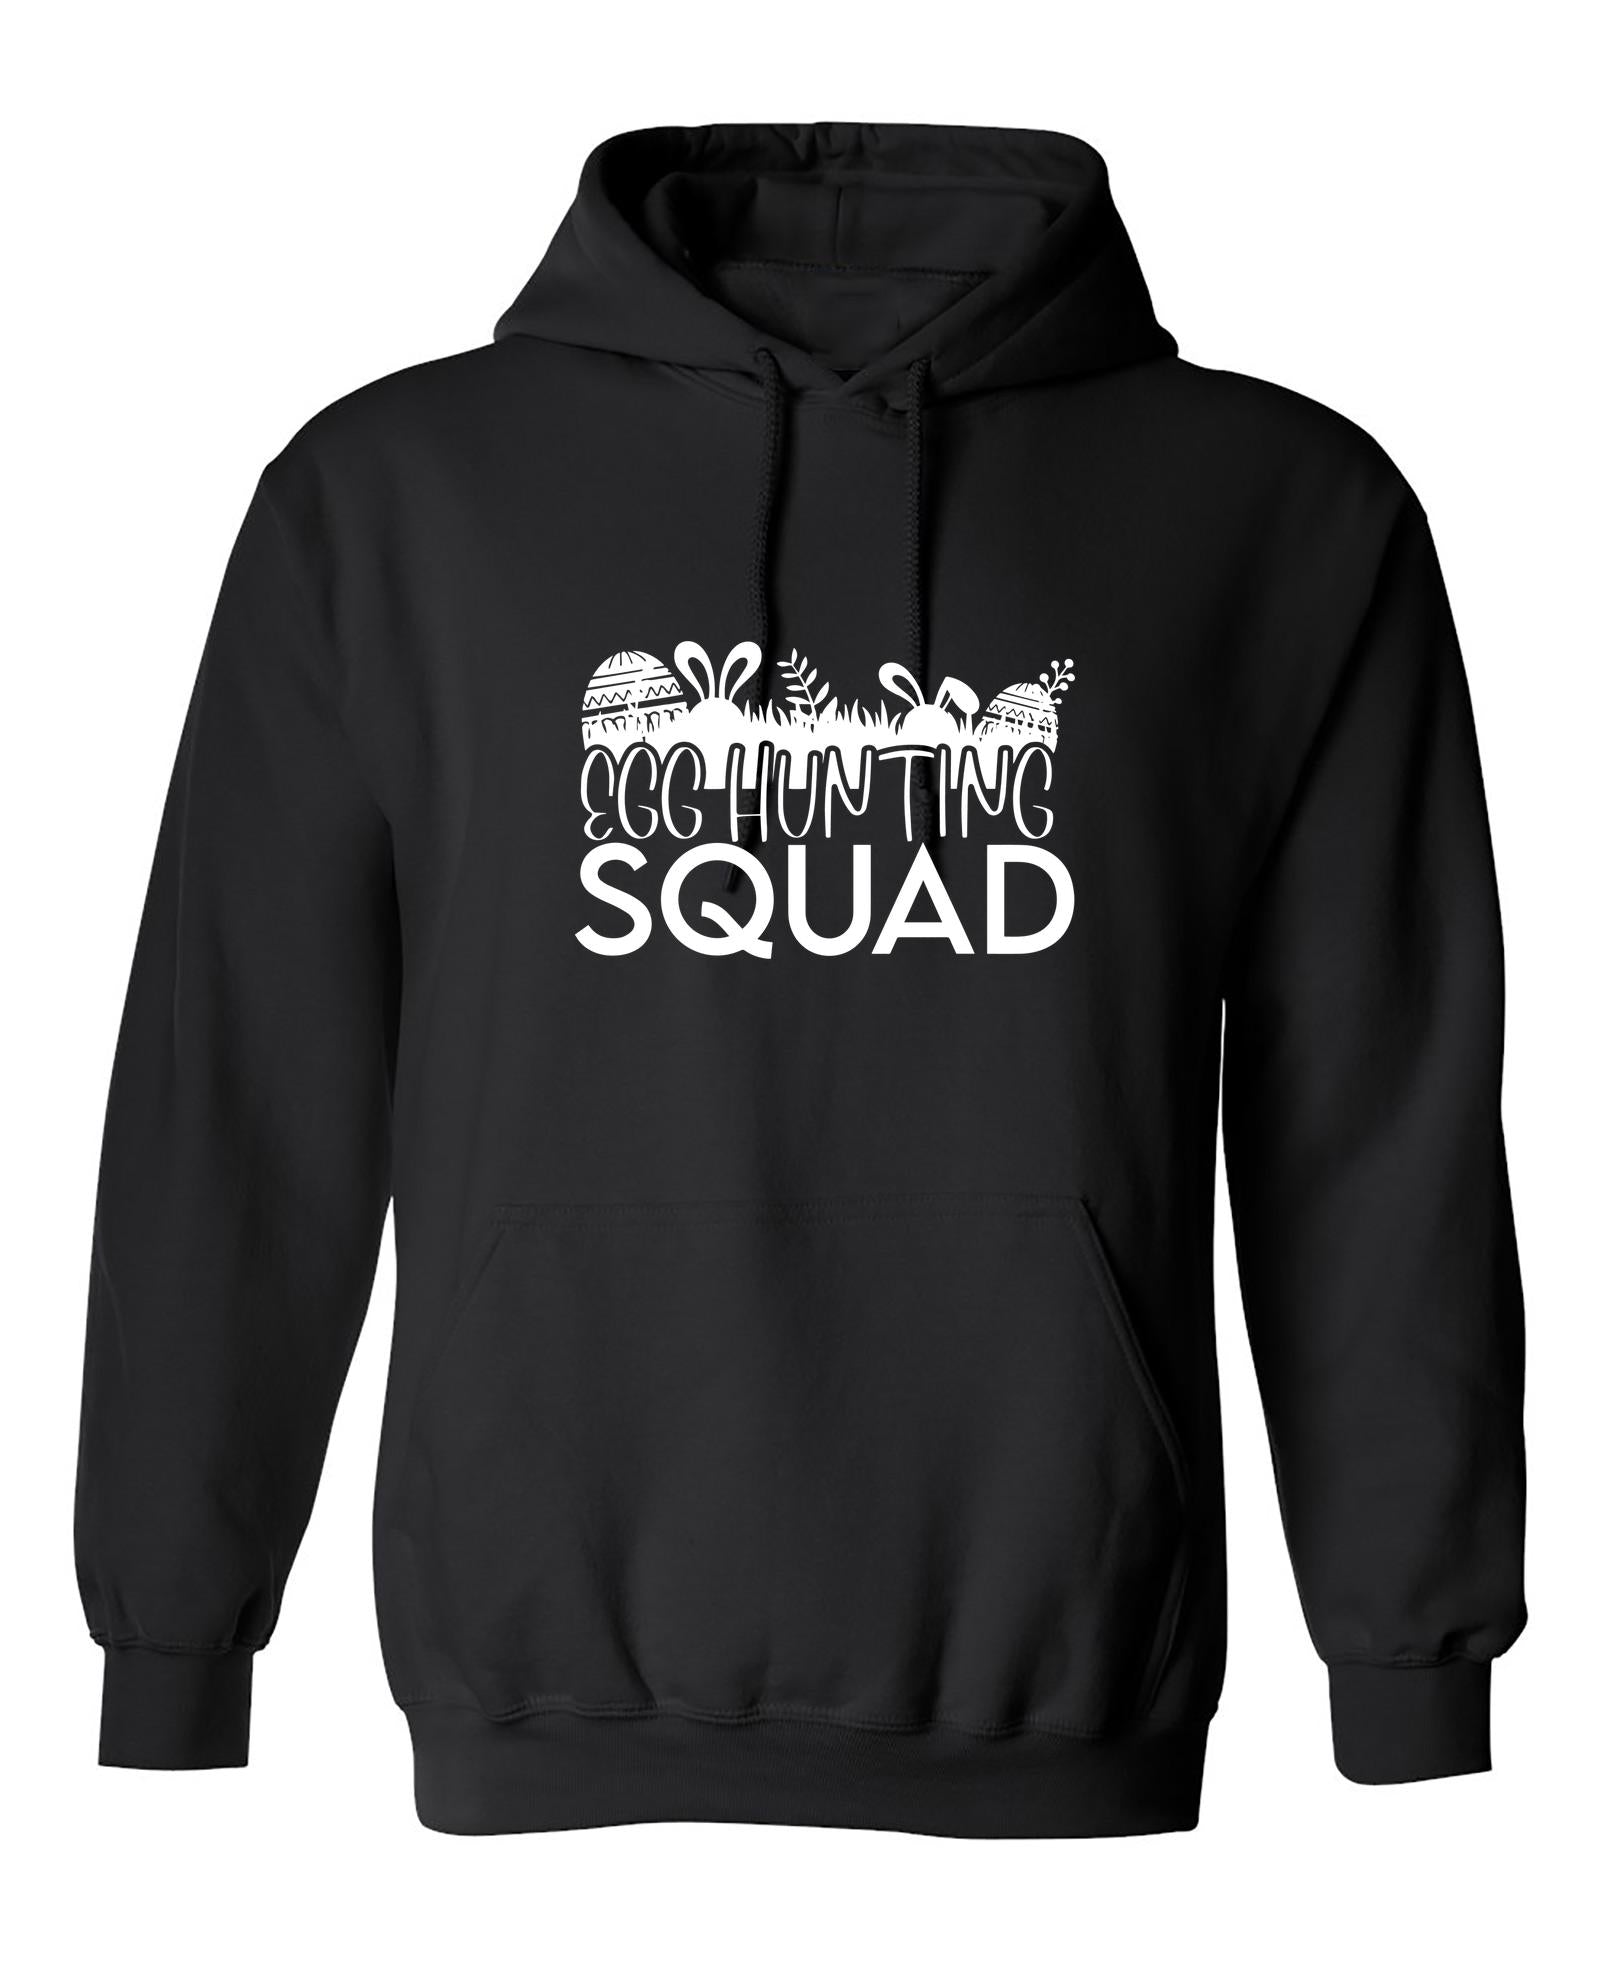 Funny T-Shirts design "Egg Hunting Squad"